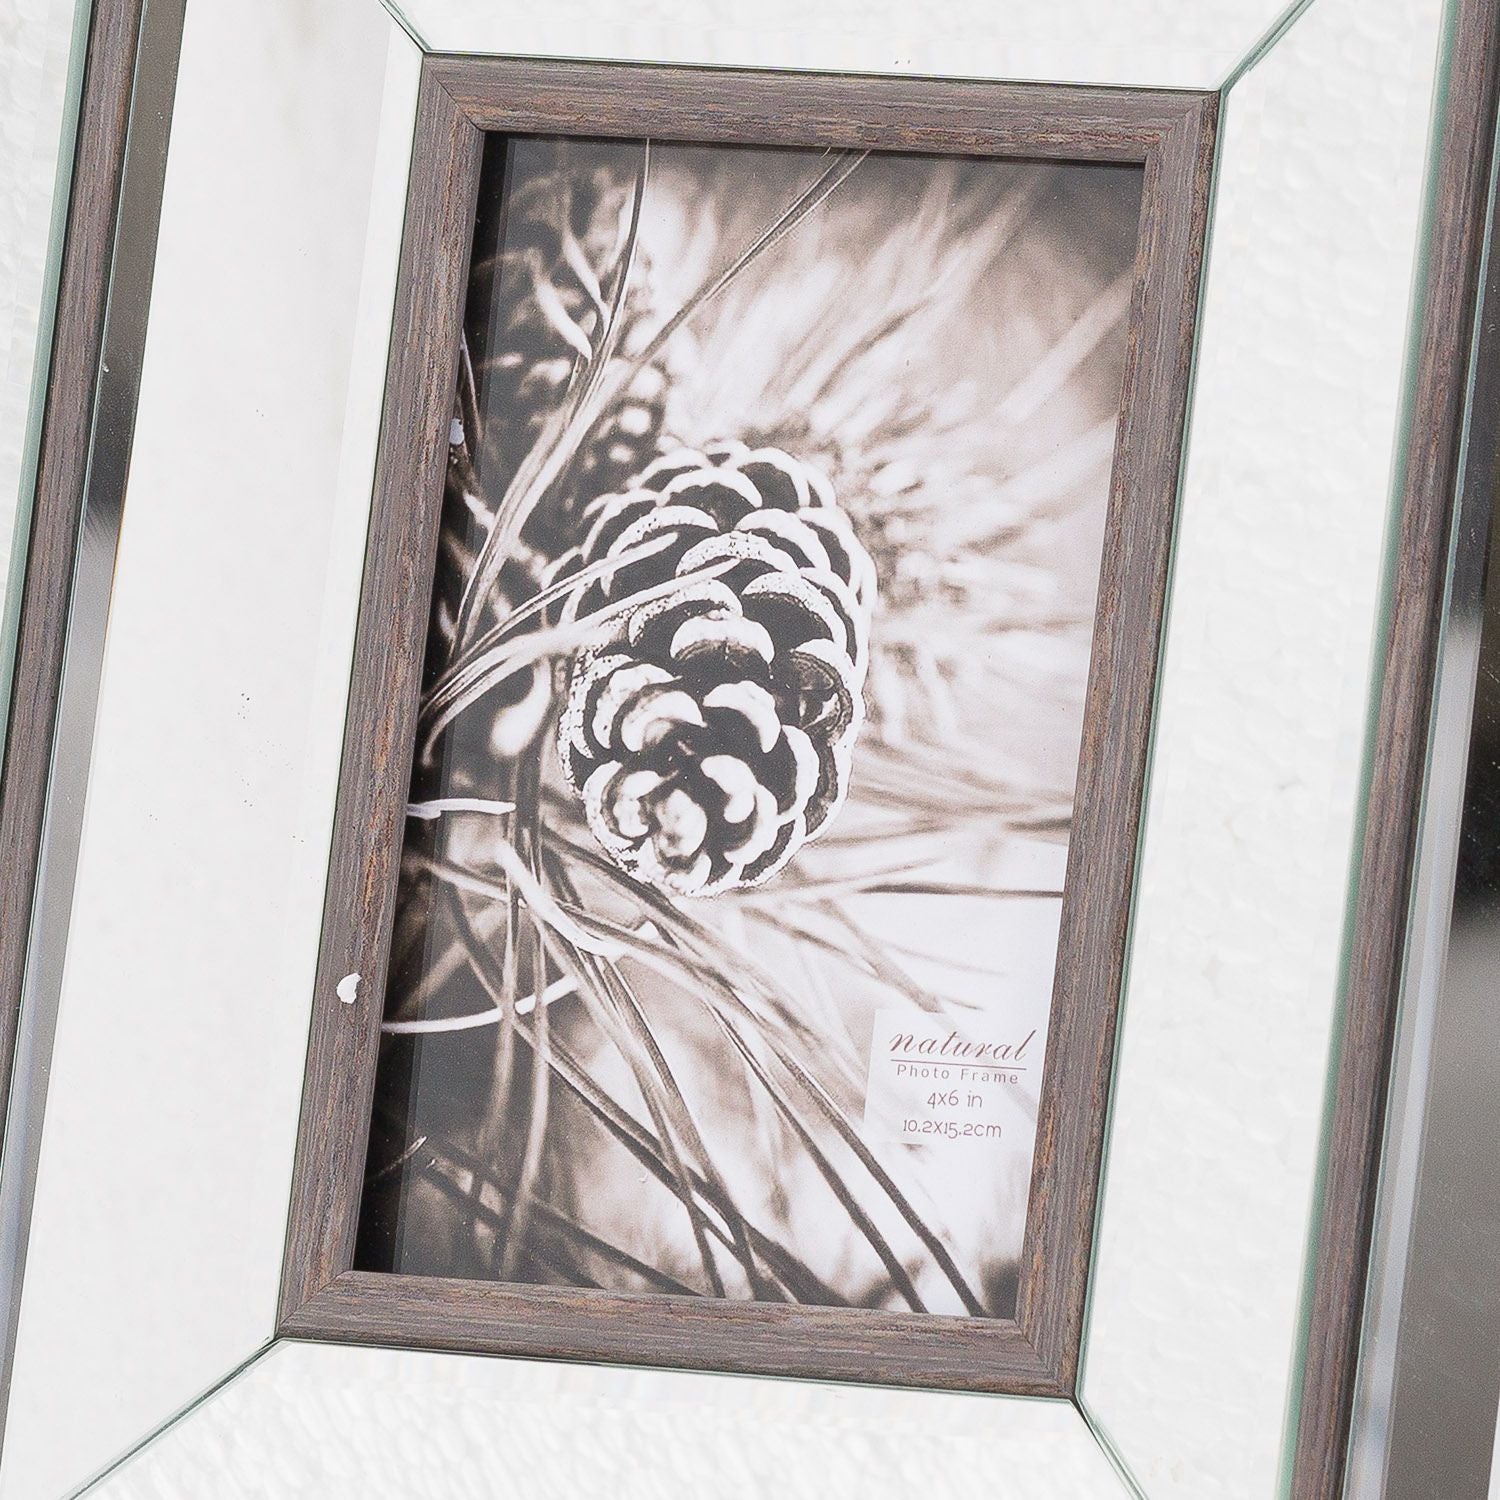 Mirrored photo frame bevelled design 4x6